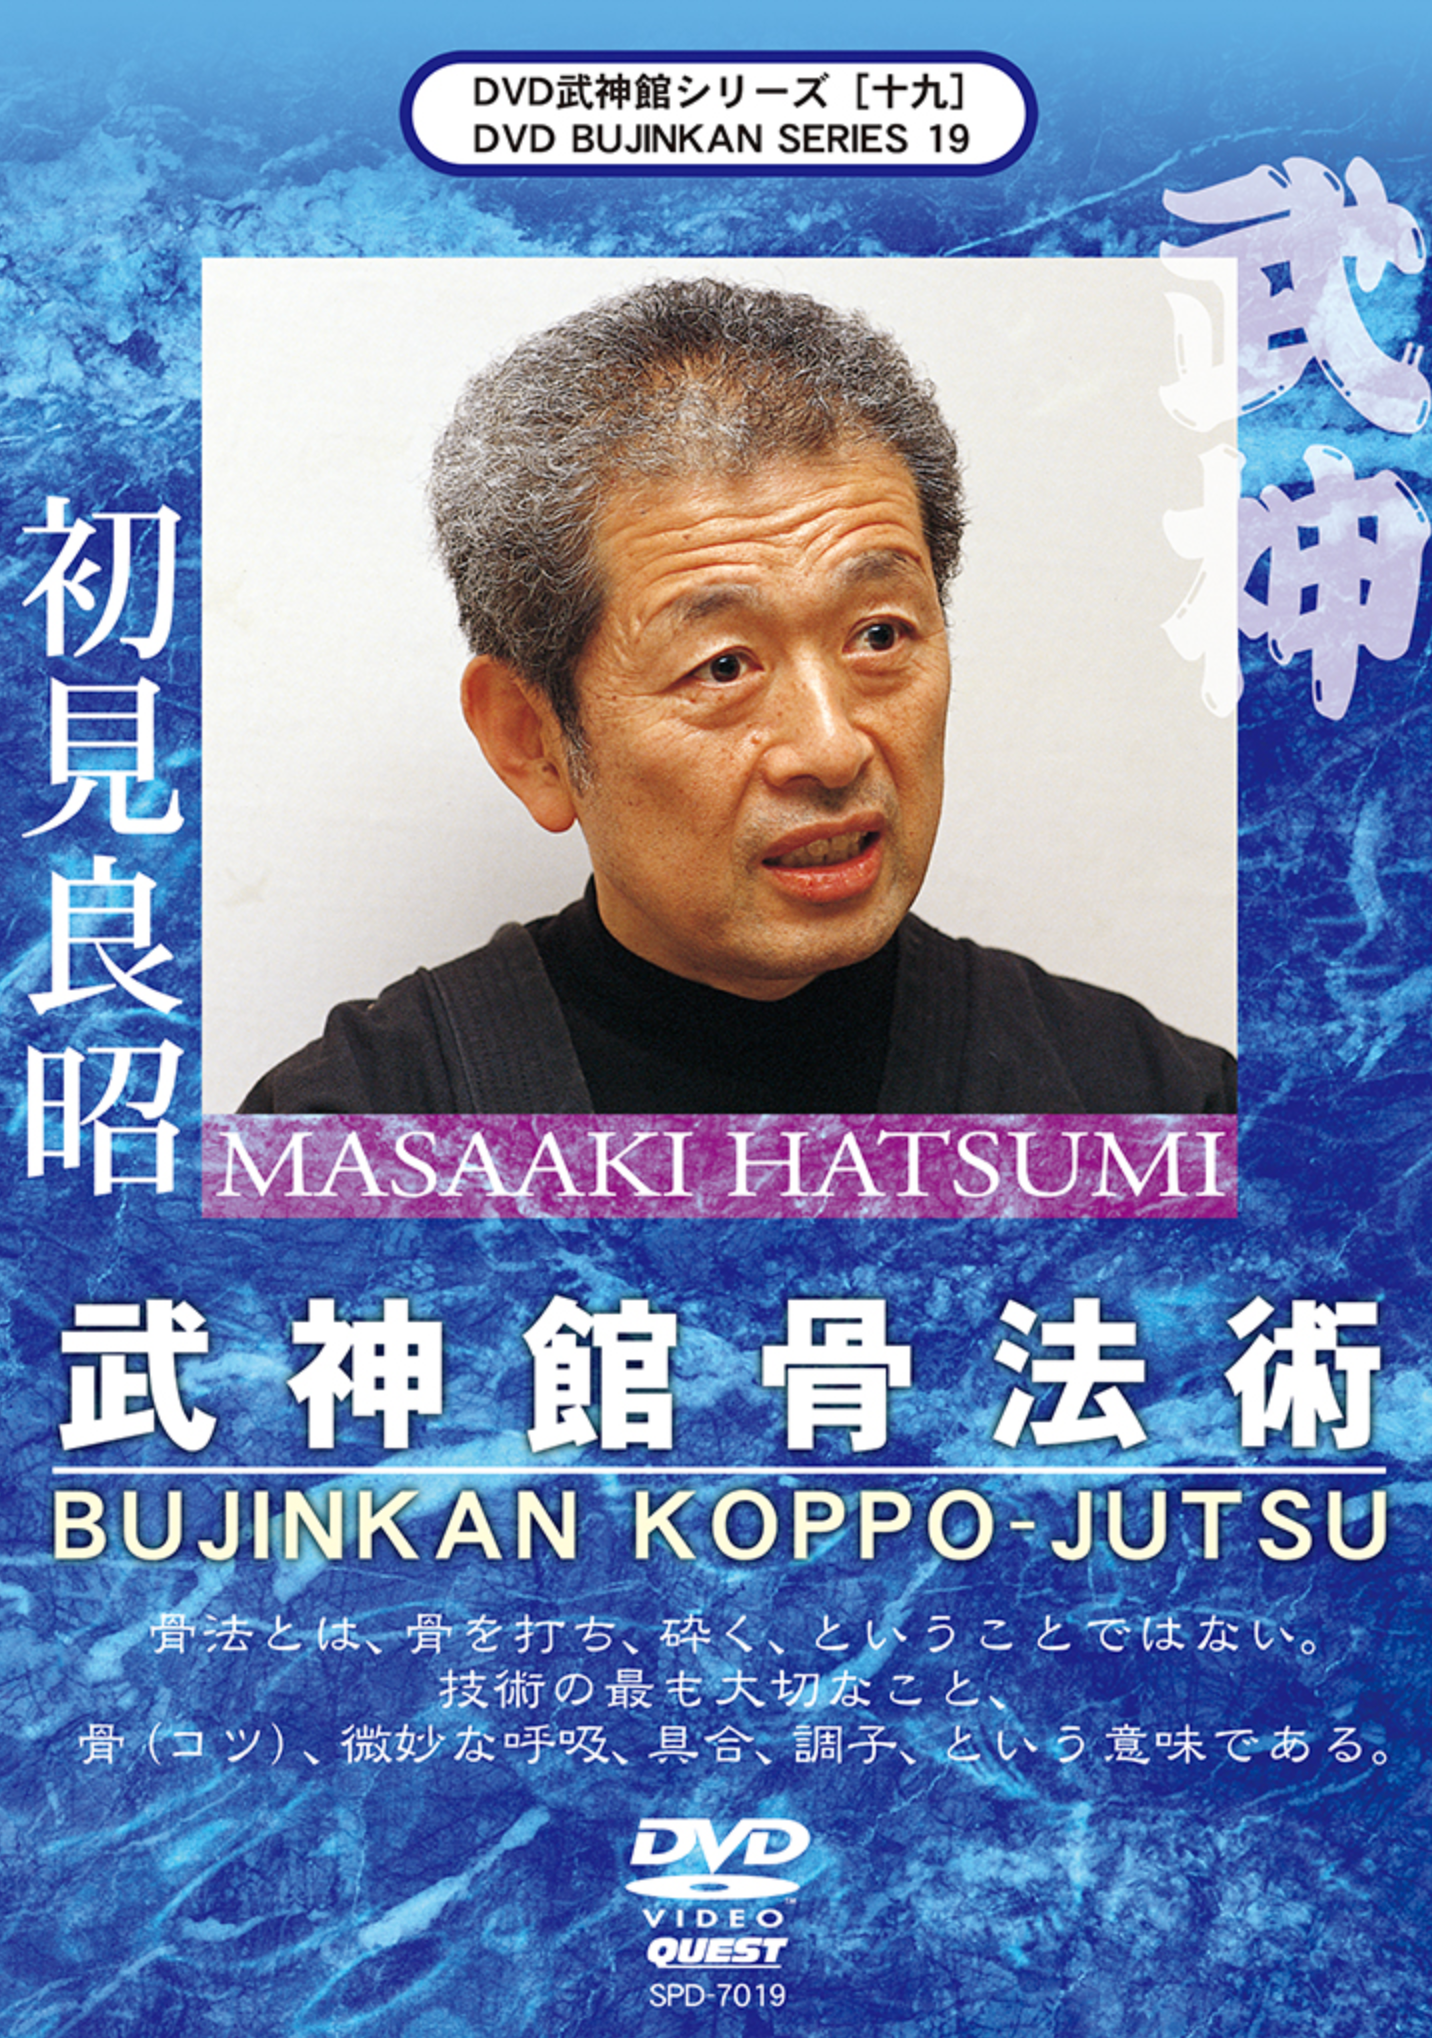 Bujinkan DVD Series 19: Koppo Jutsu with Masaaki Hatsumi - Budovideos Inc